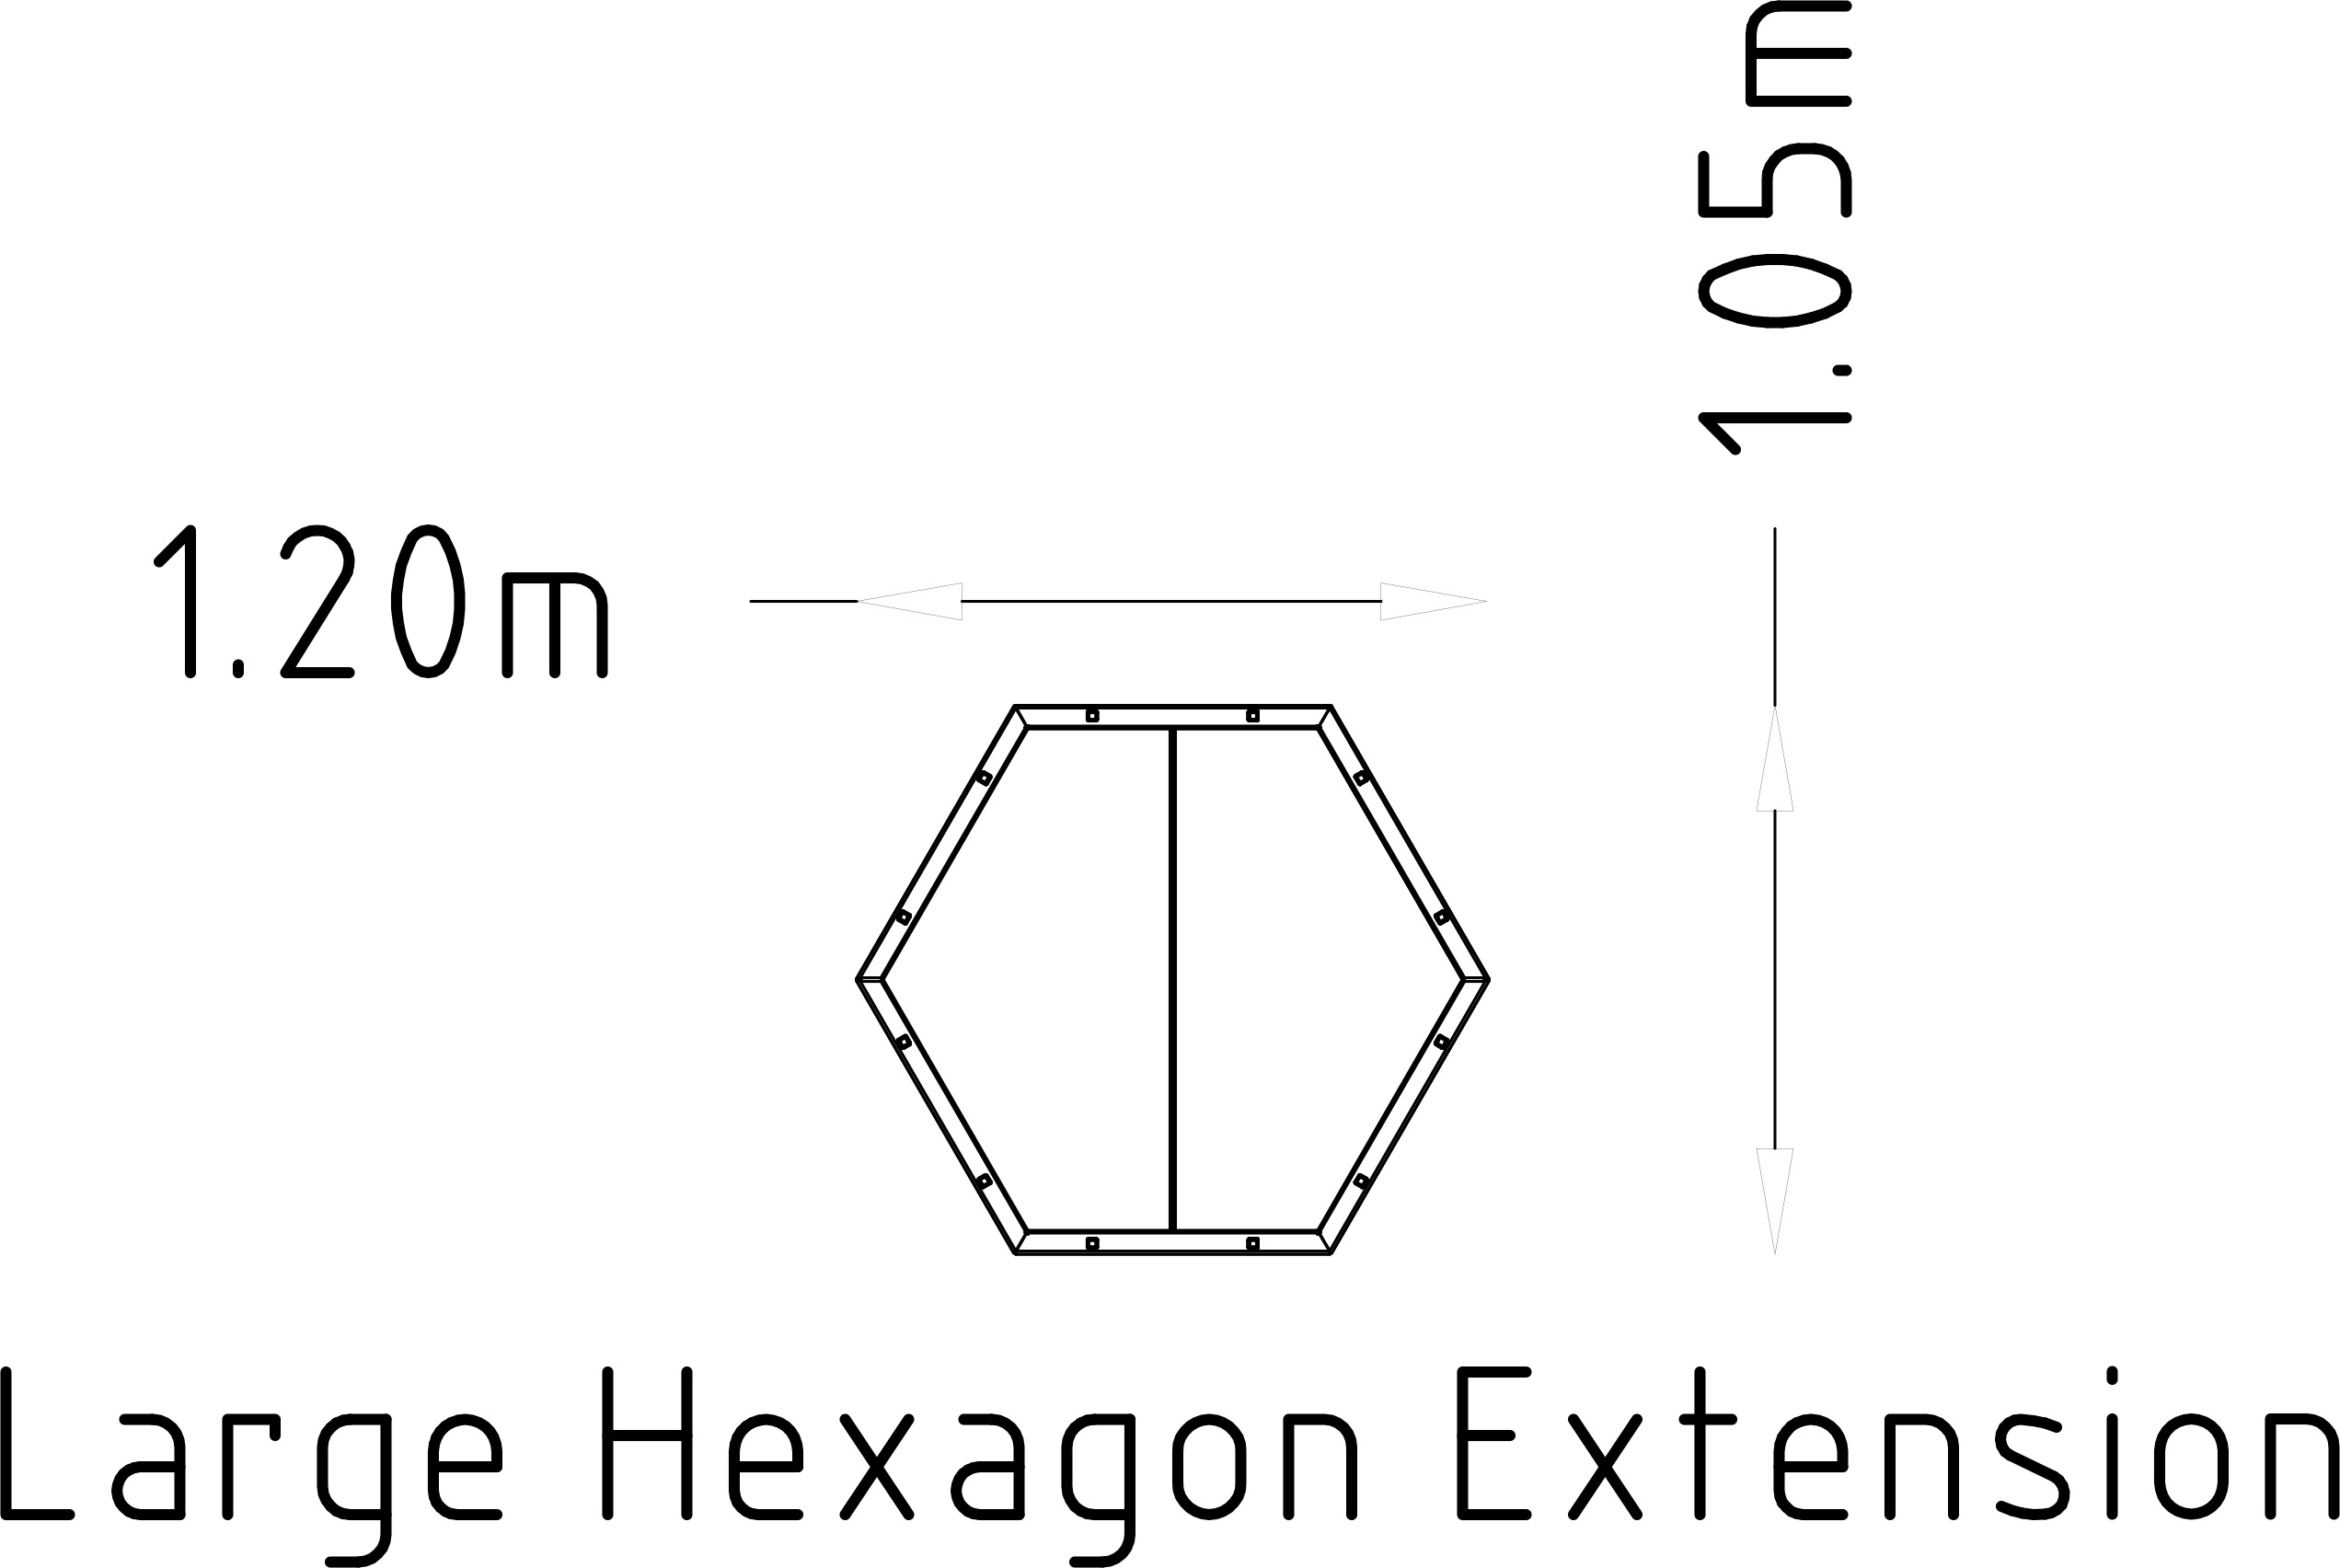 Hex Ext Module Rosenlund (L)